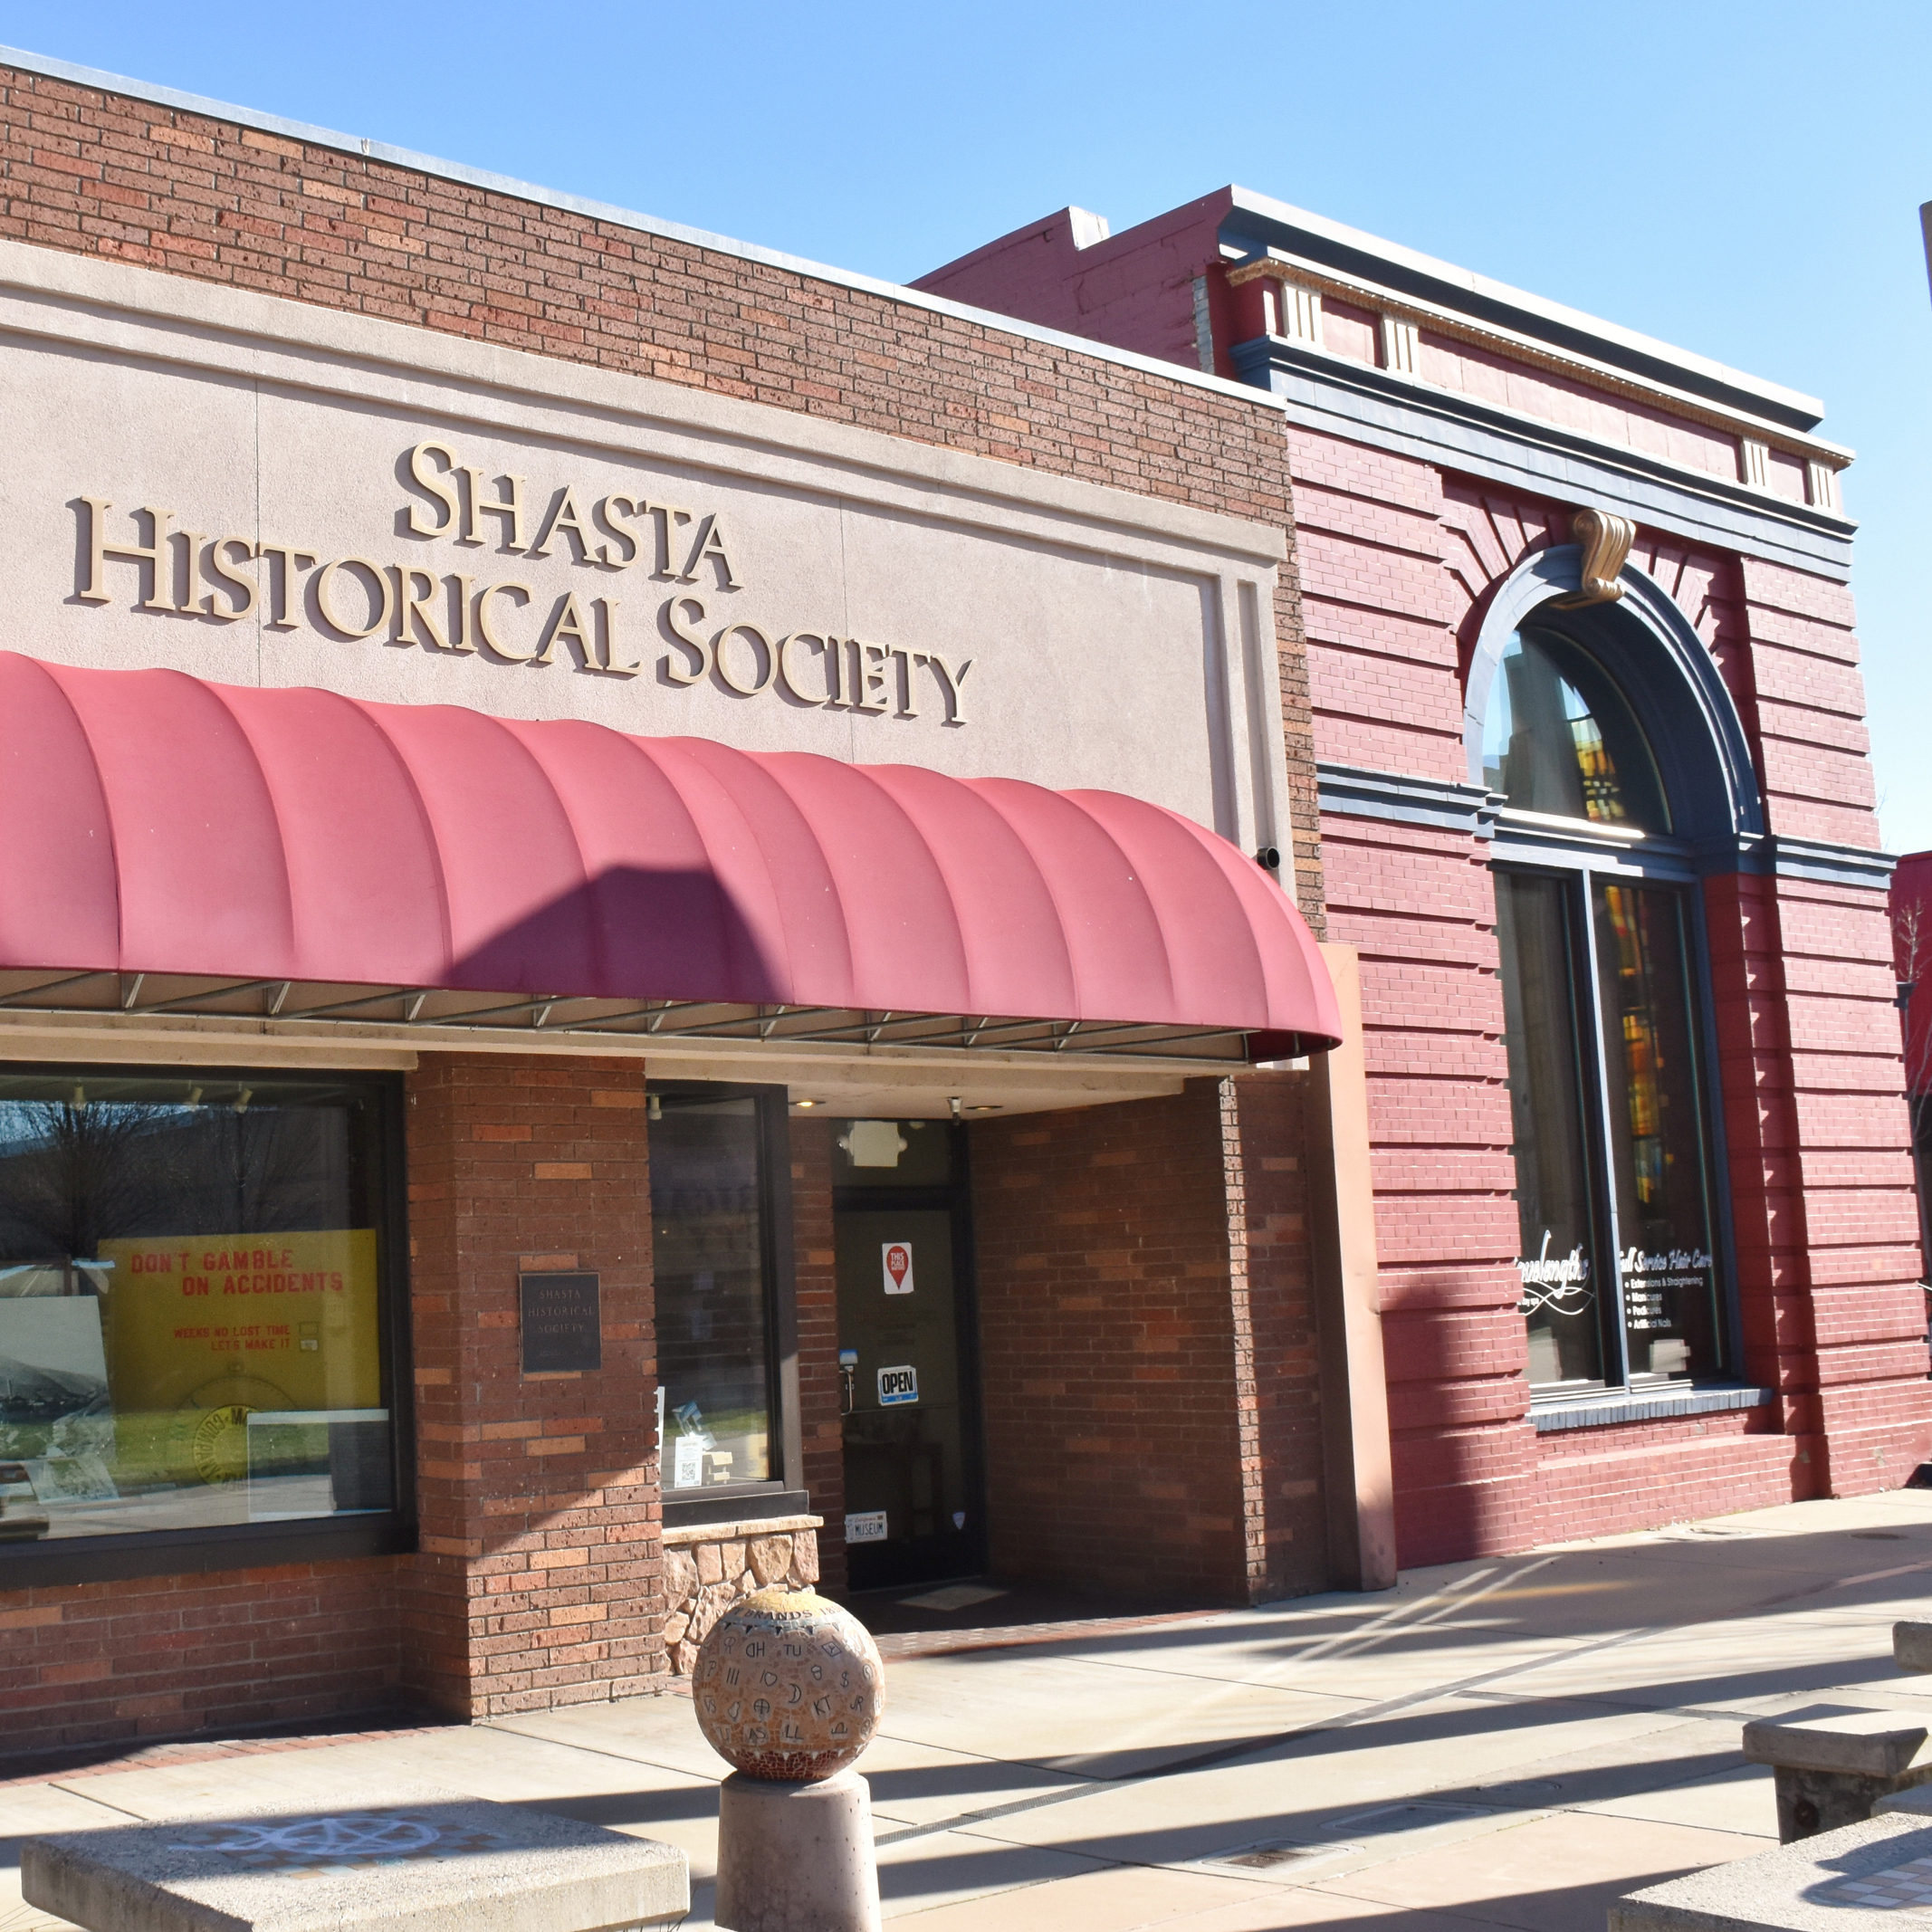 Shasta Historical Society - sponsor of the Gregorio & Pilar Alzueta Memorial Scholarship